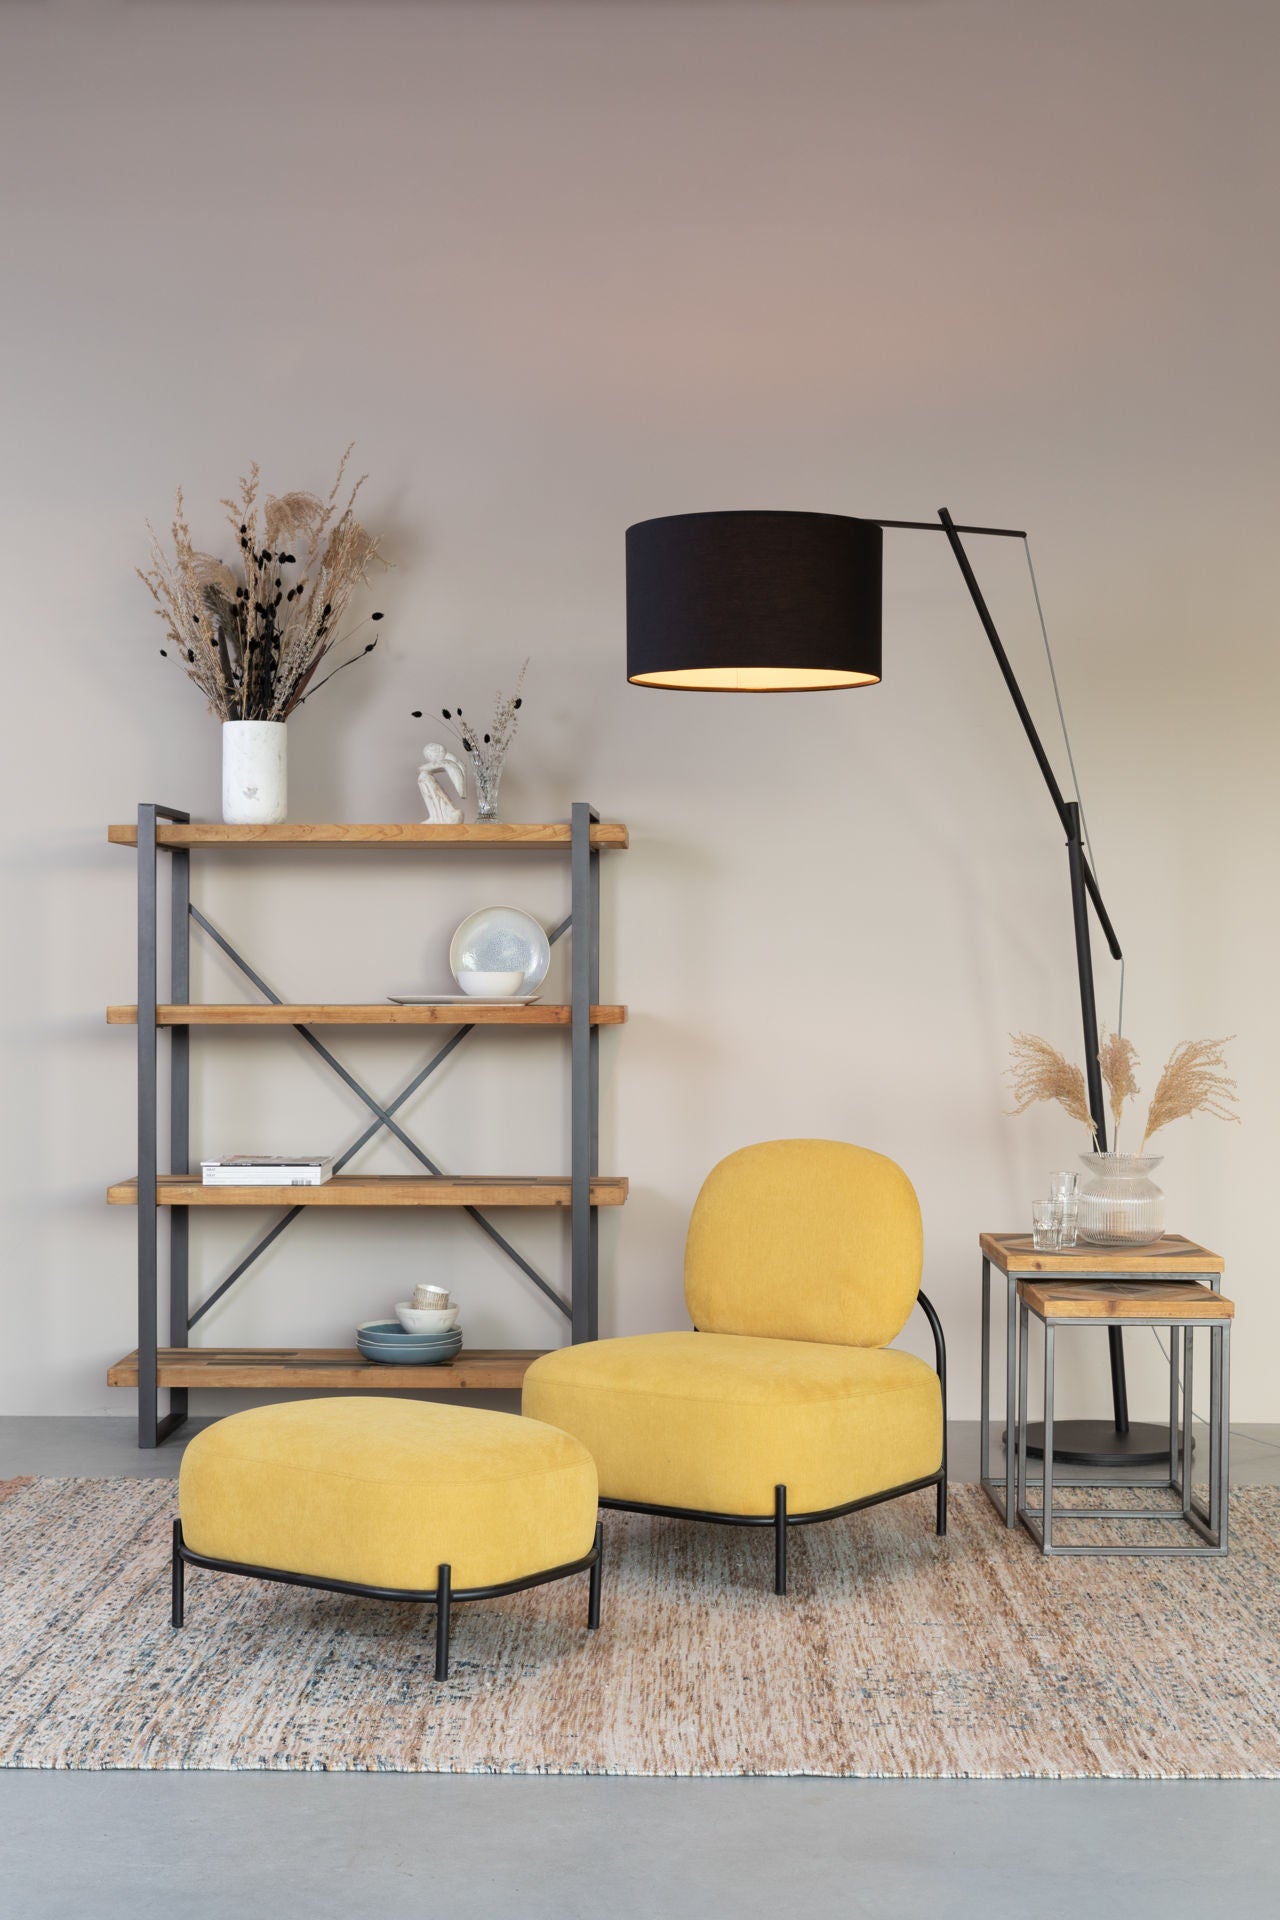 Nancy's Valencia West Lounge Chair - Modern - Yellow - Polyester, Plywood, Iron - 71.5 cm x 66 cm x 77 cm